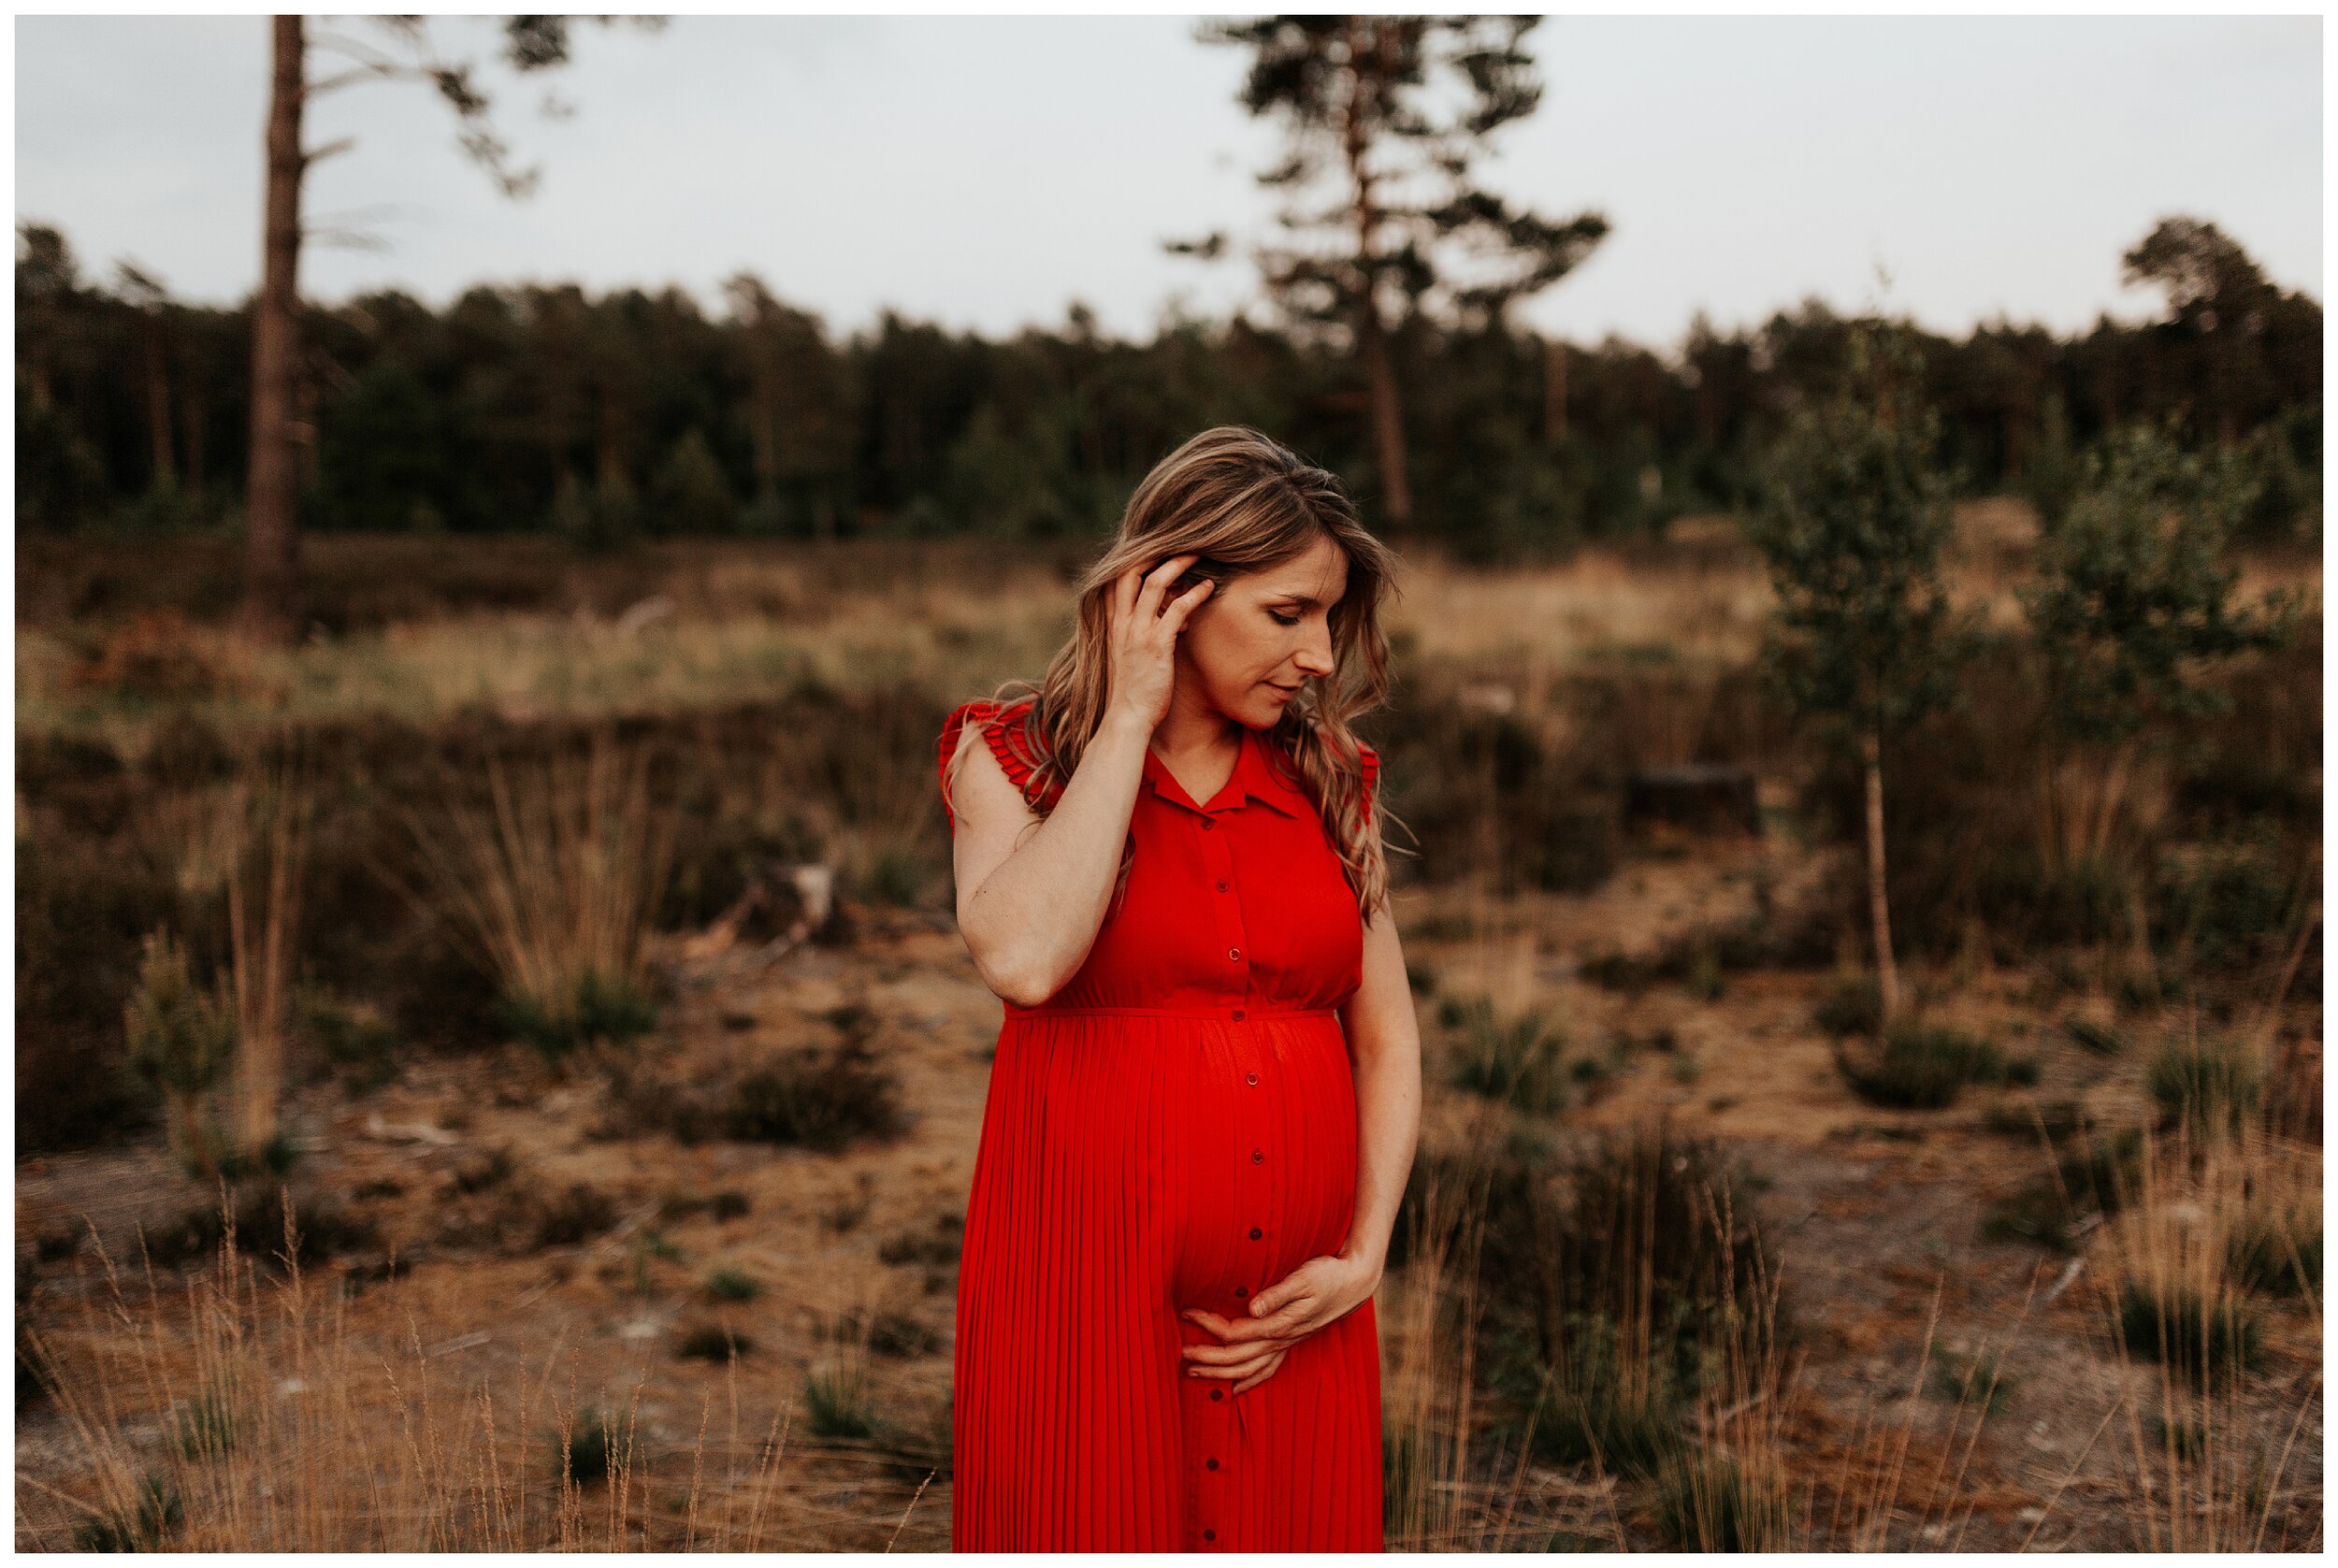 zwangerschapsfotografie-zwangerschapsshoot-zwangerschapsaankondiging-lisahelsenphotography-herentals-westerlo-herselt-kempen-vlaanderen_0013.jpg